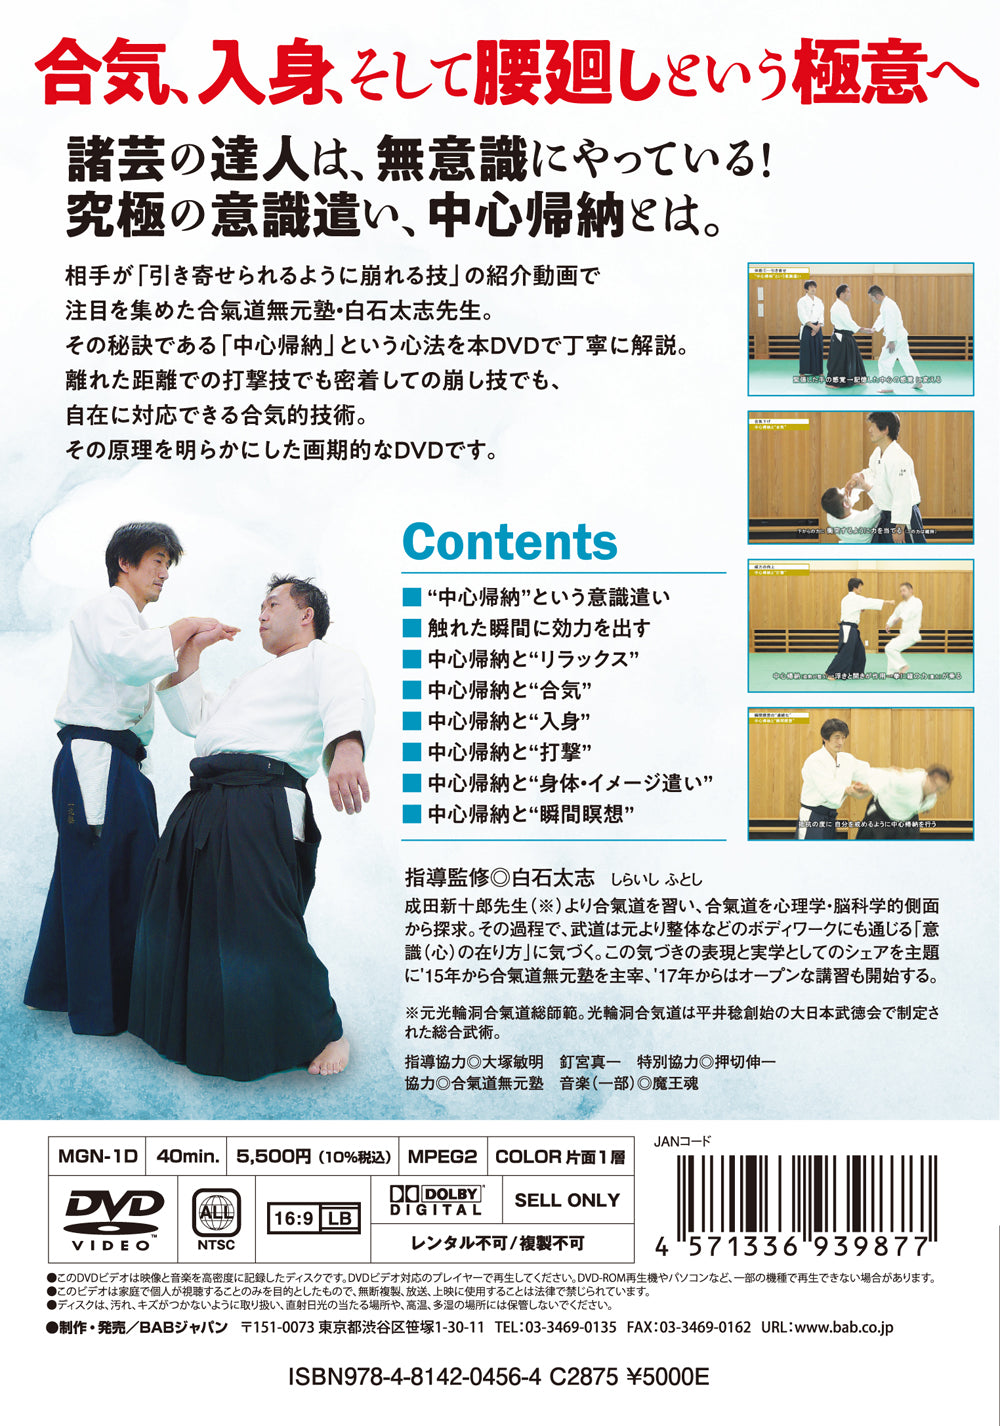 Método secreto de la mente en Aikido DVD de Futoshi Shiraishi